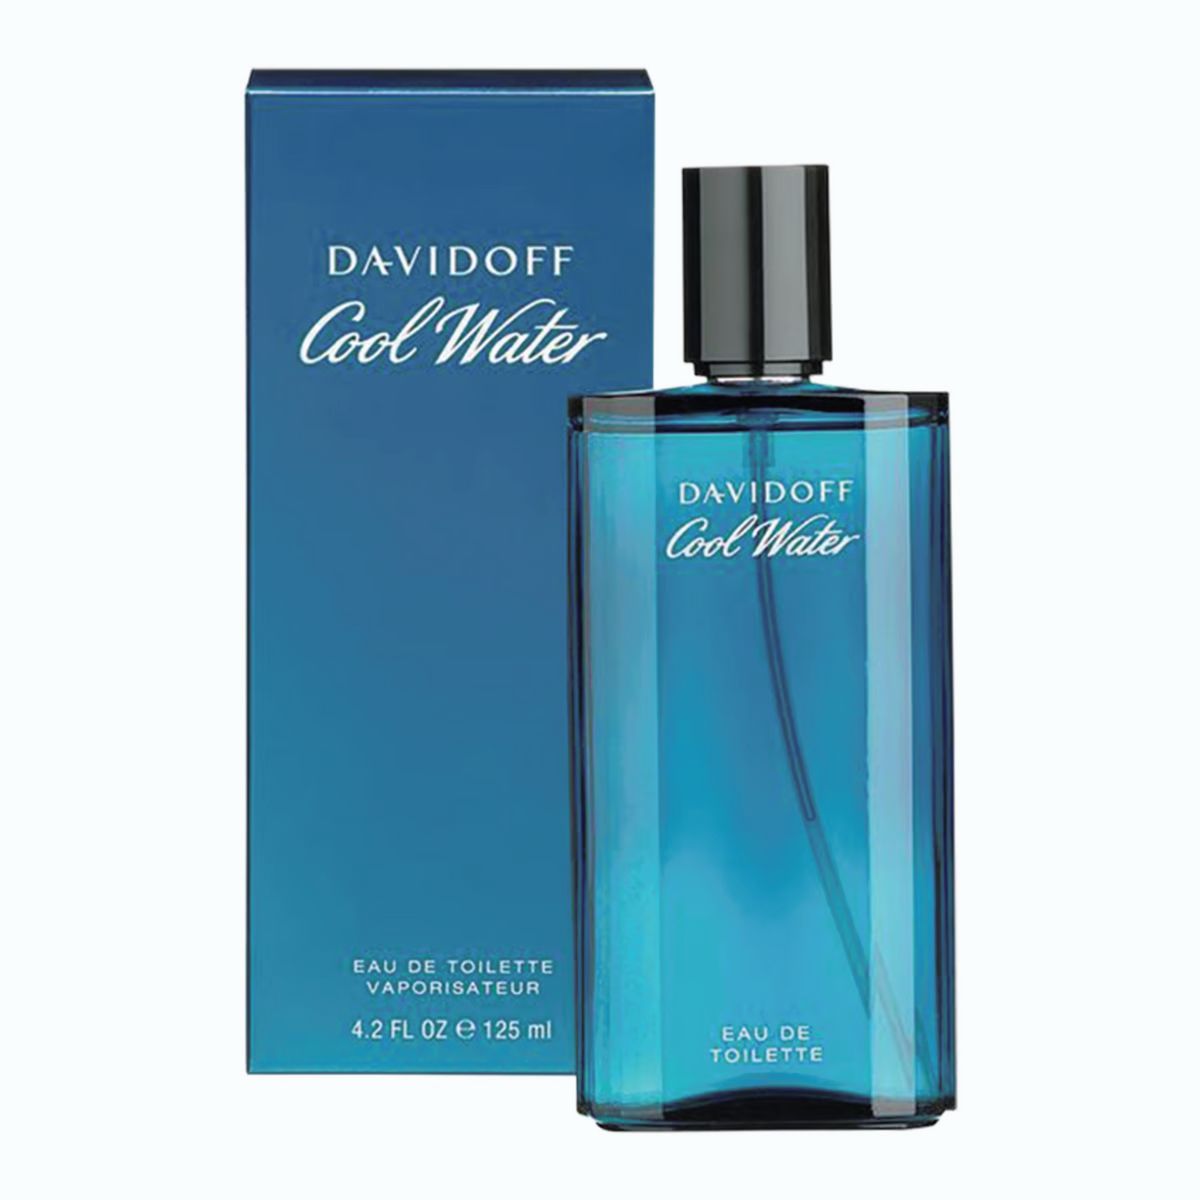 For Men's: Pendora Chromite, Saviour, Blue Wave , Bohemia, Aventura EDP - 100ml Each, Pack of 5 with Free Perfume Gift Set